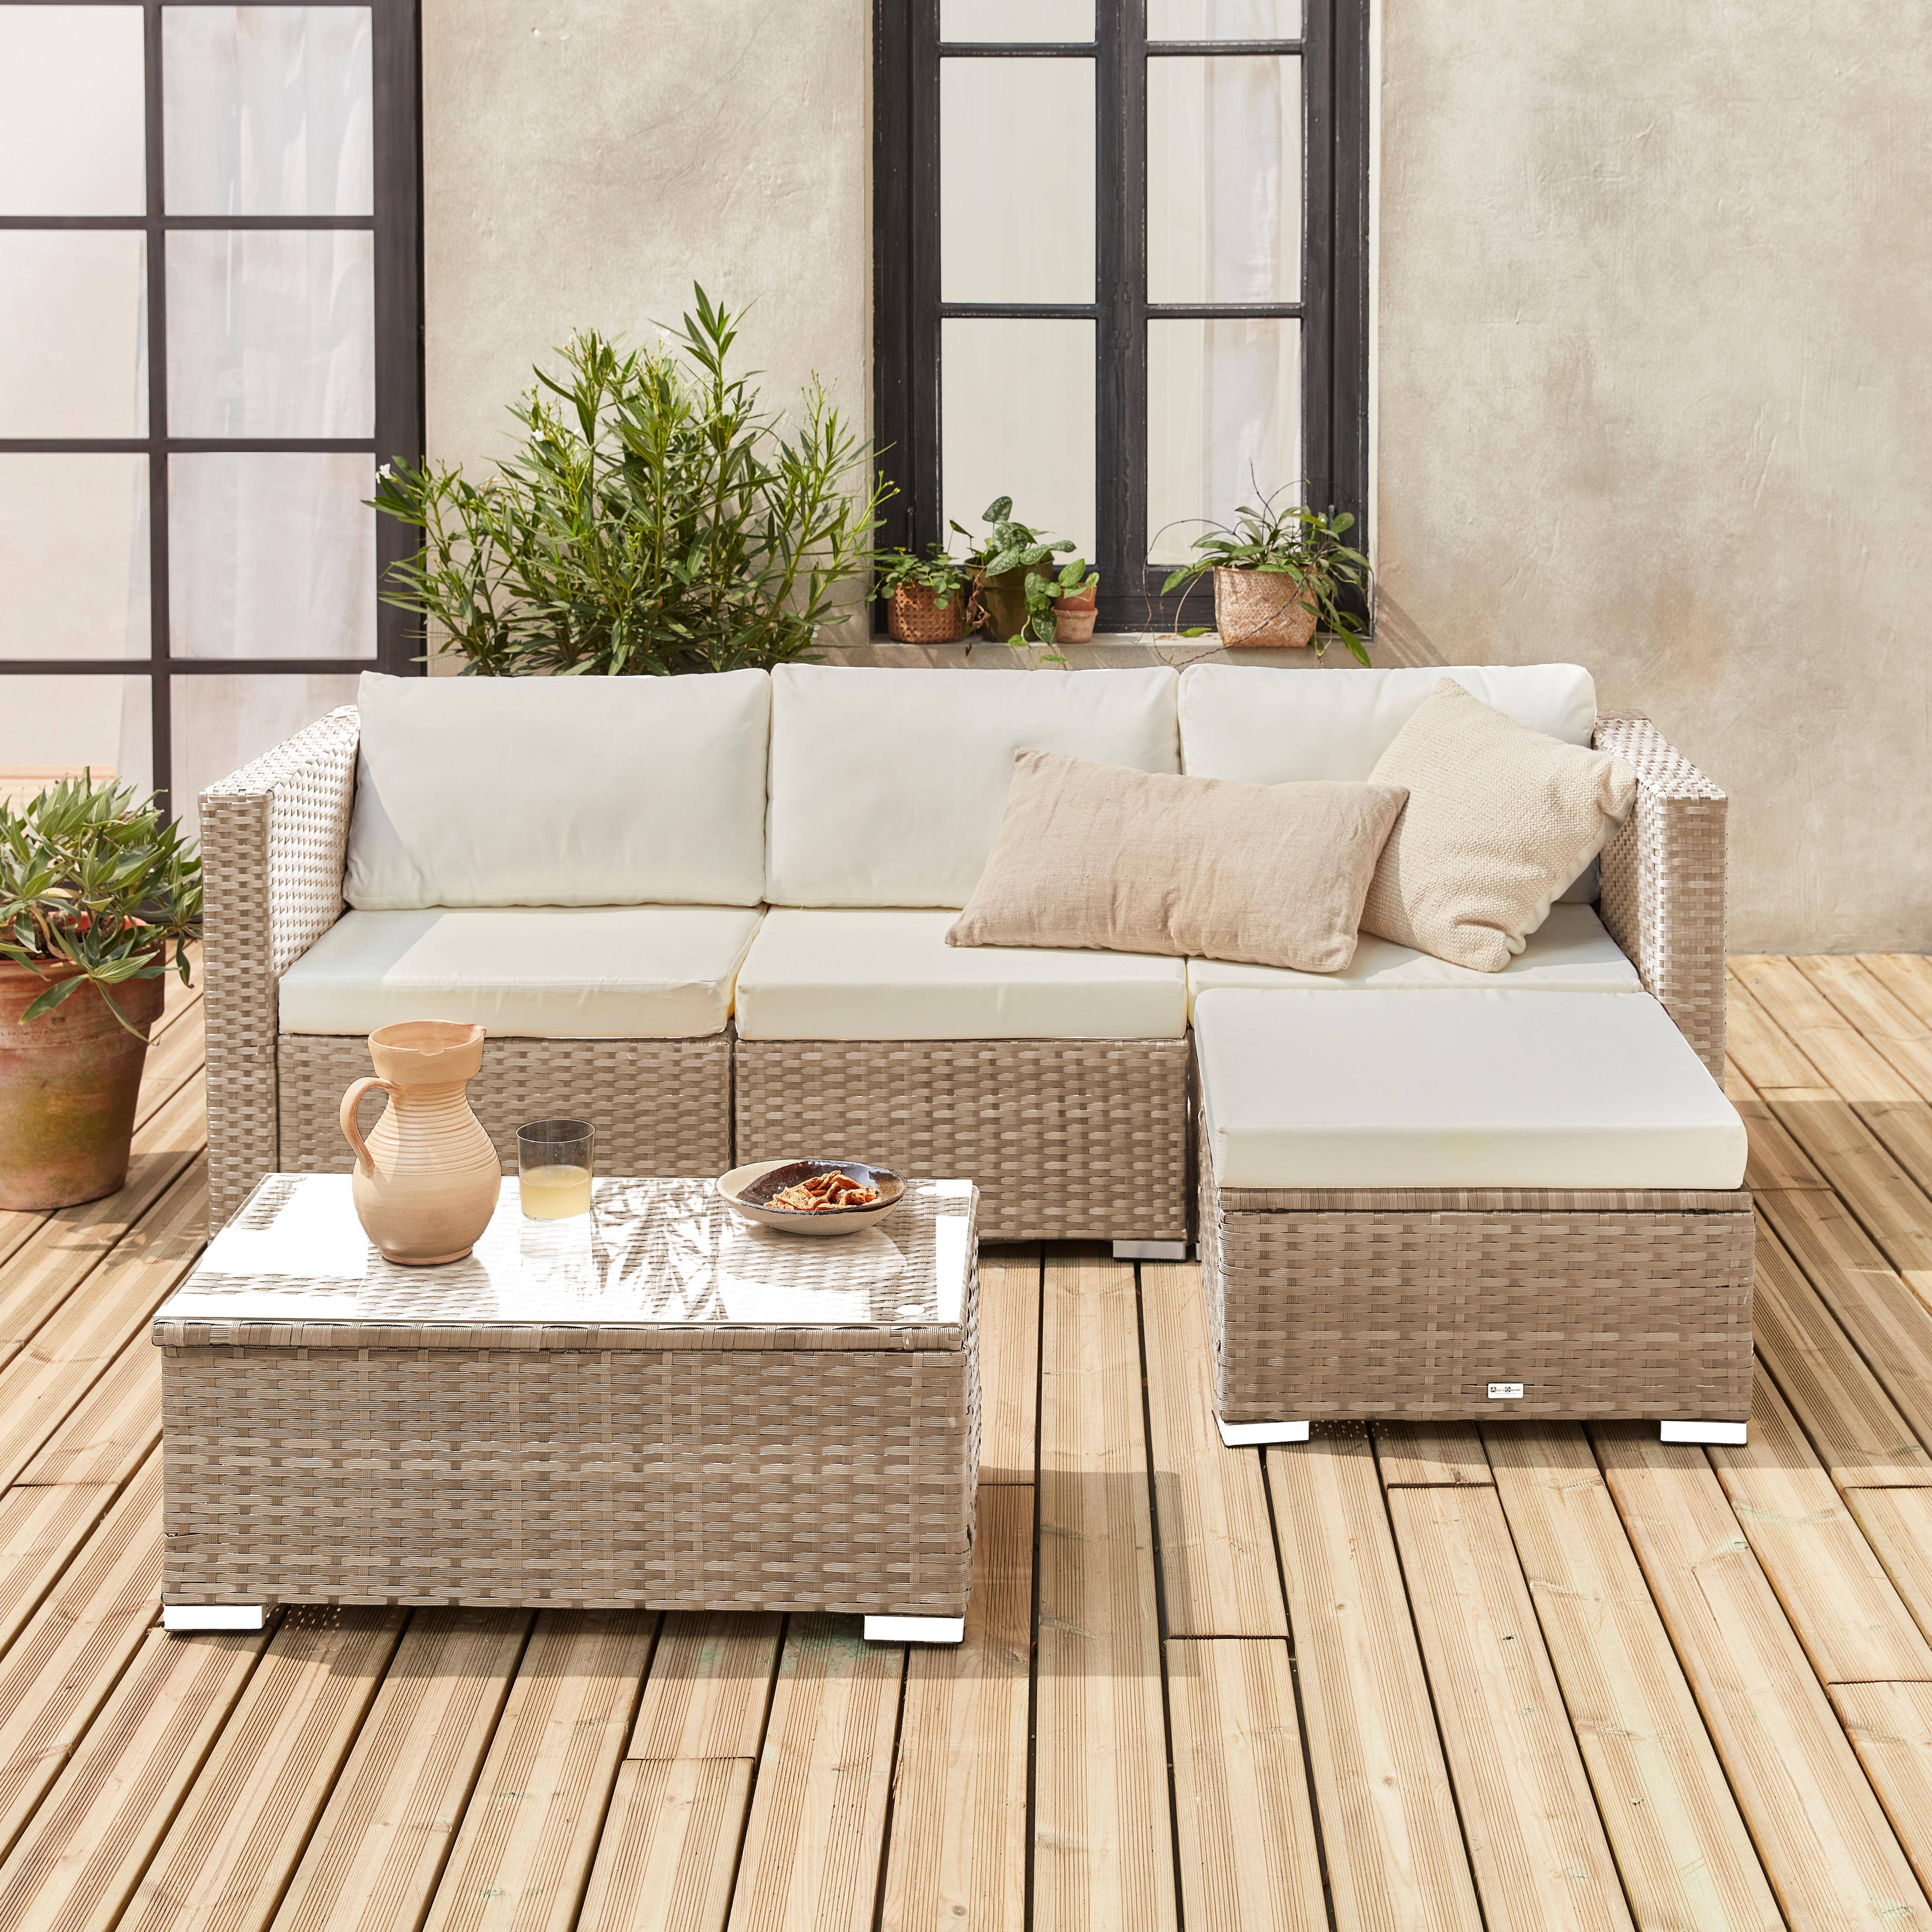 4-seater rattan garden sofa set - sofa, footrest, coffee table - Torino - Beige,sweeek,Photo2